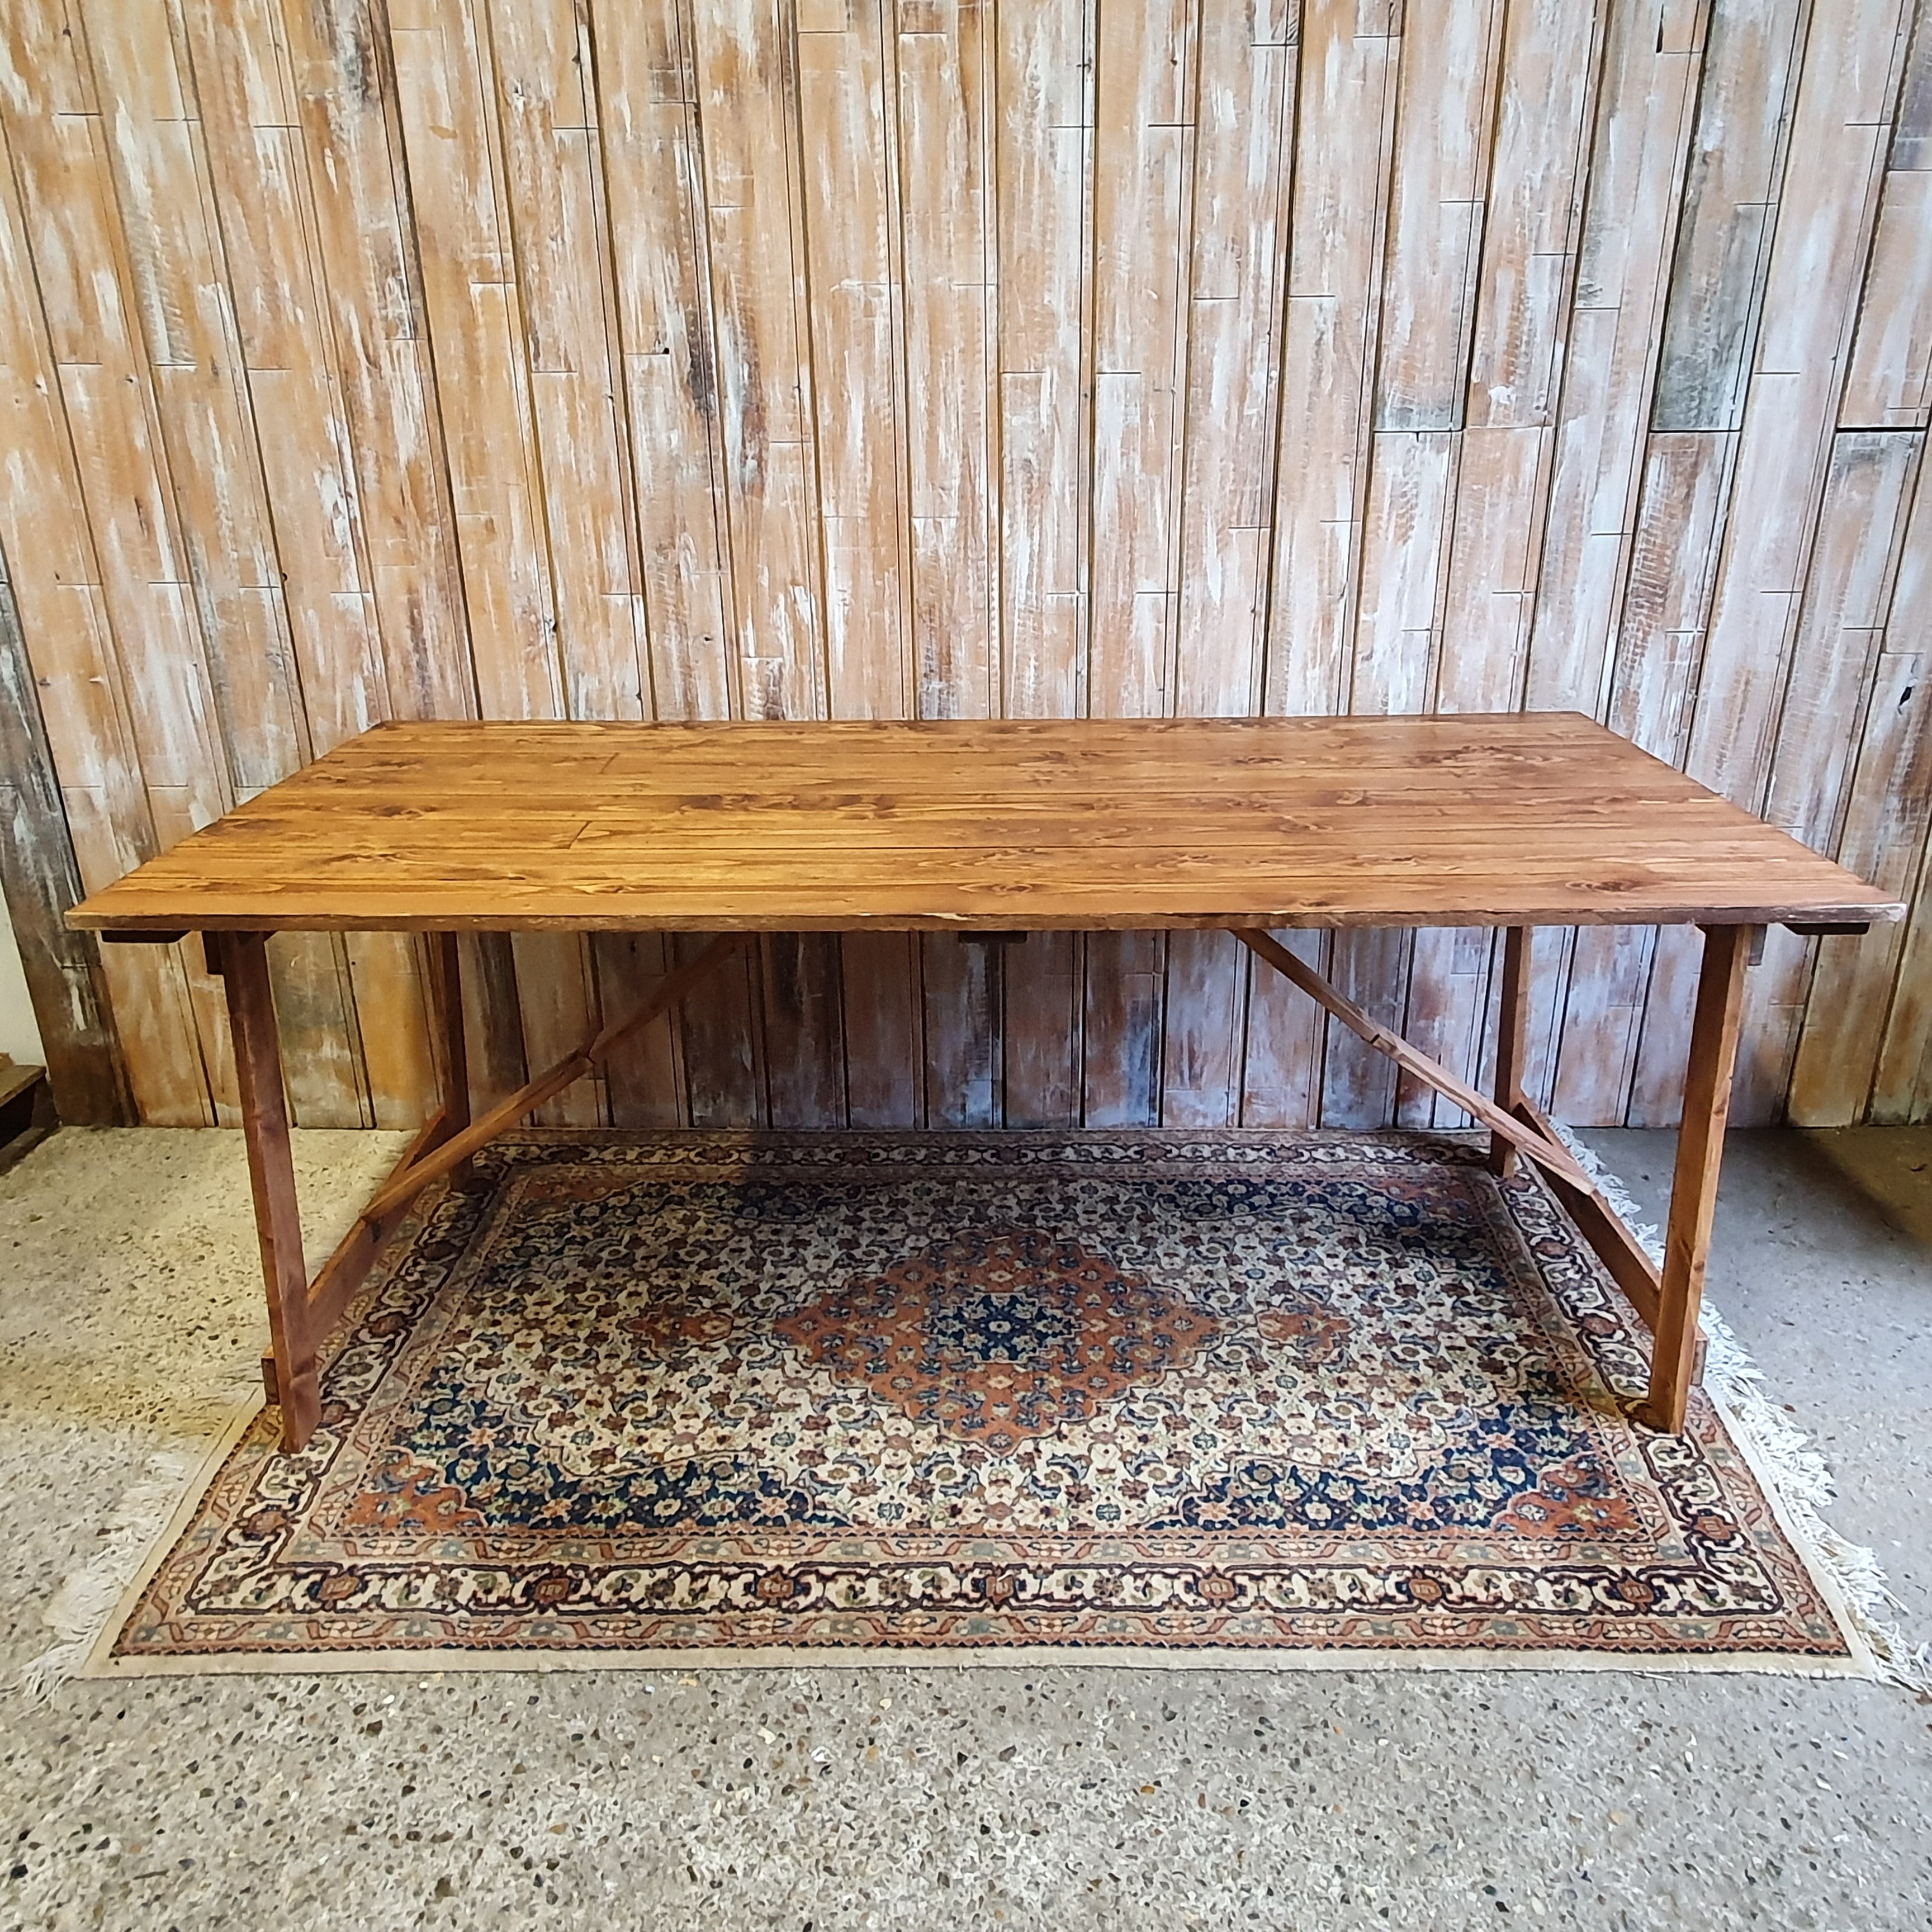 Wooden Trestle Table